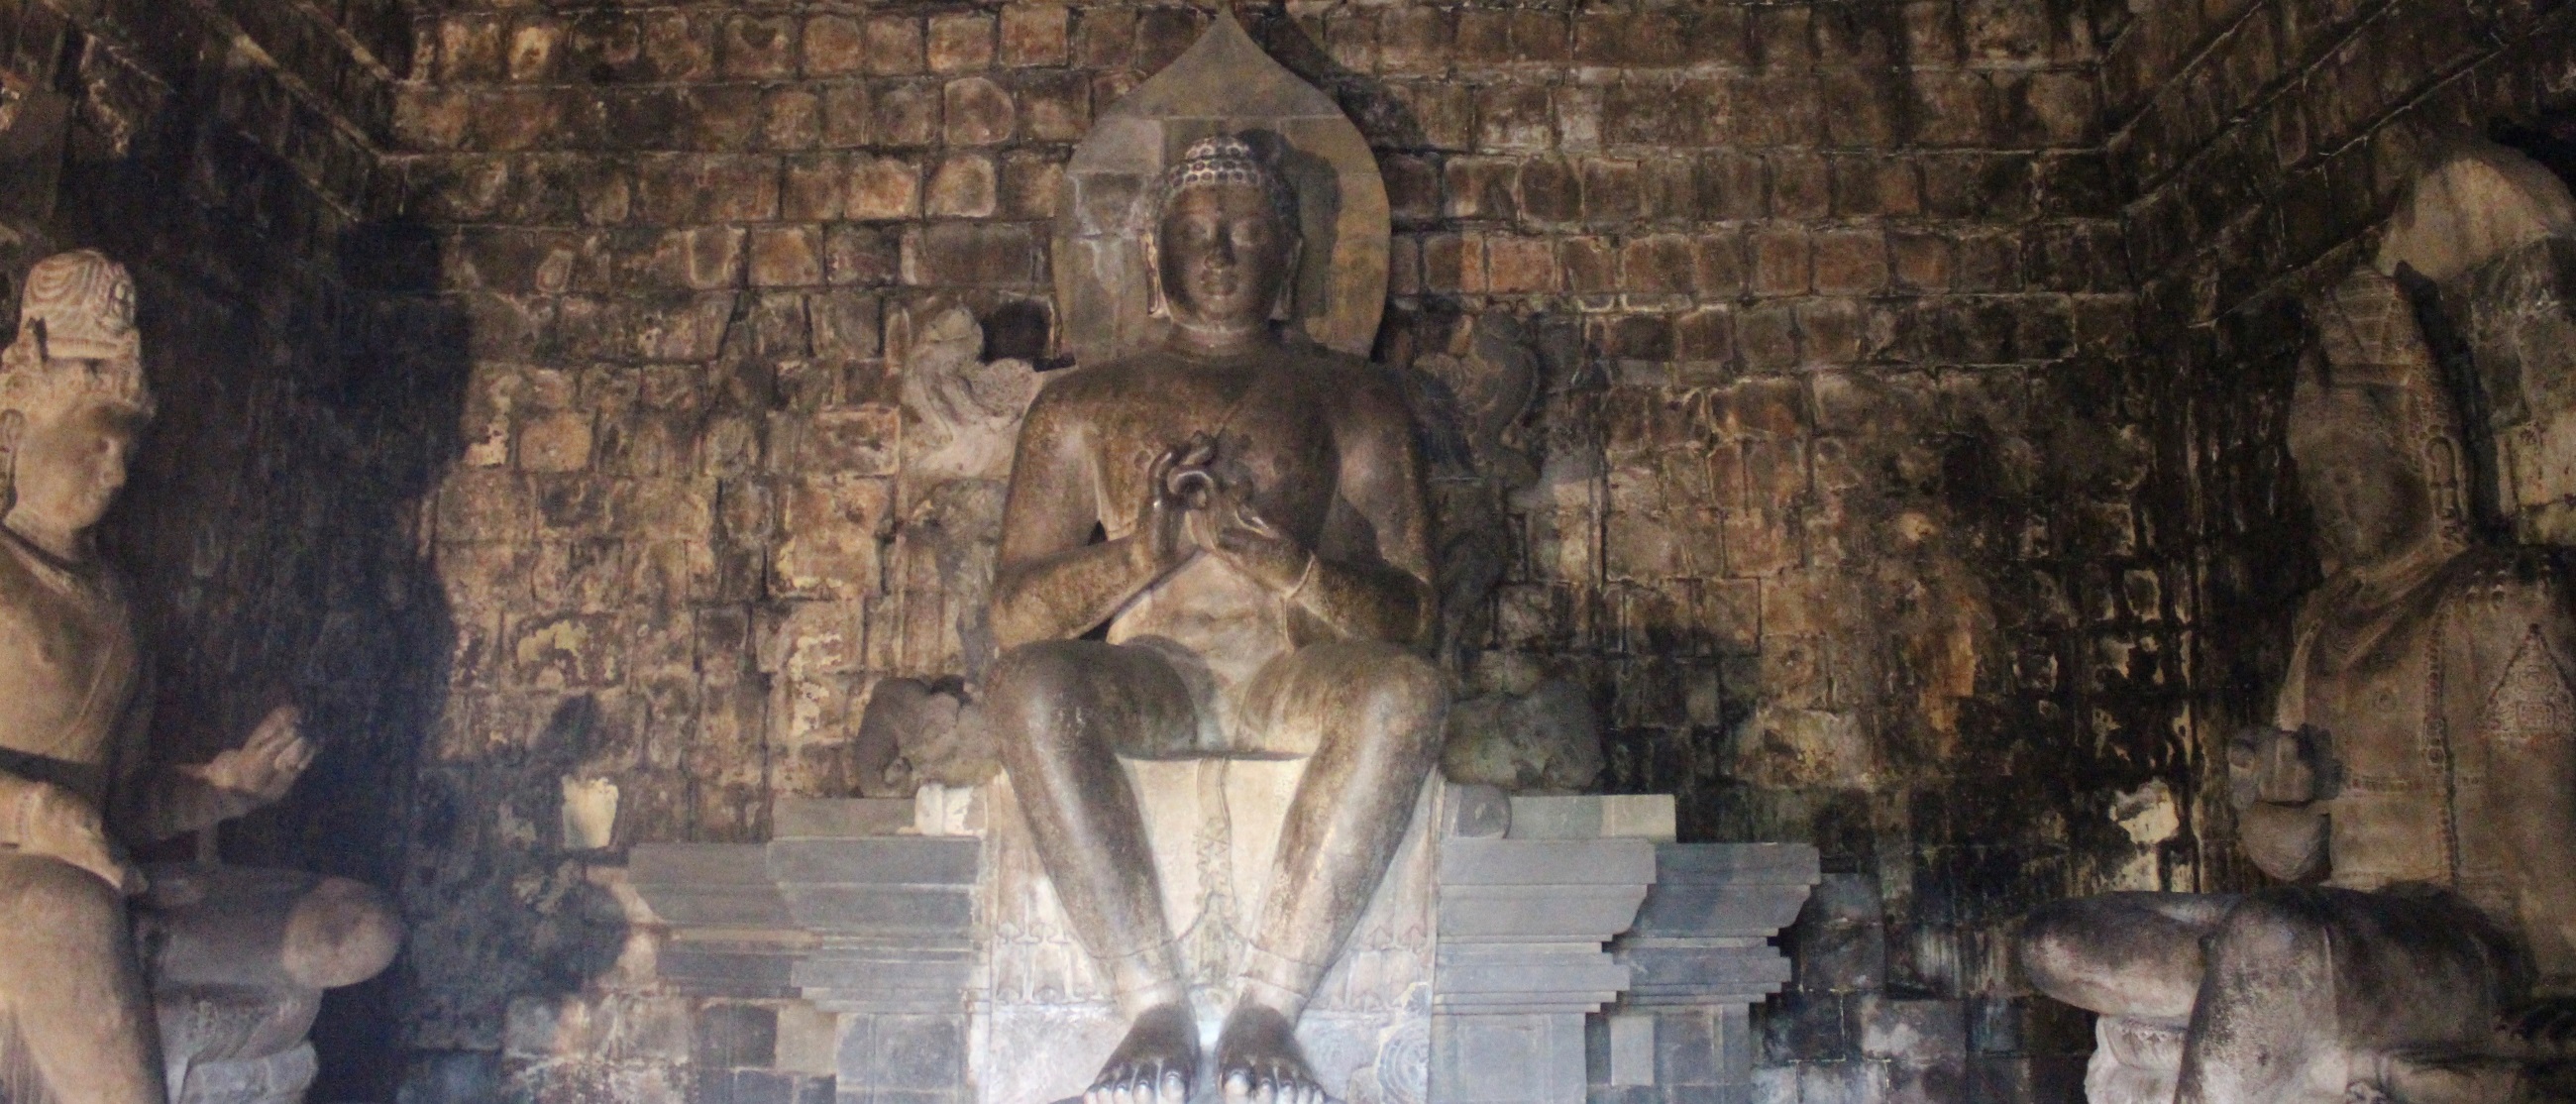 Sanctum contains three massive seated Buddhist figures